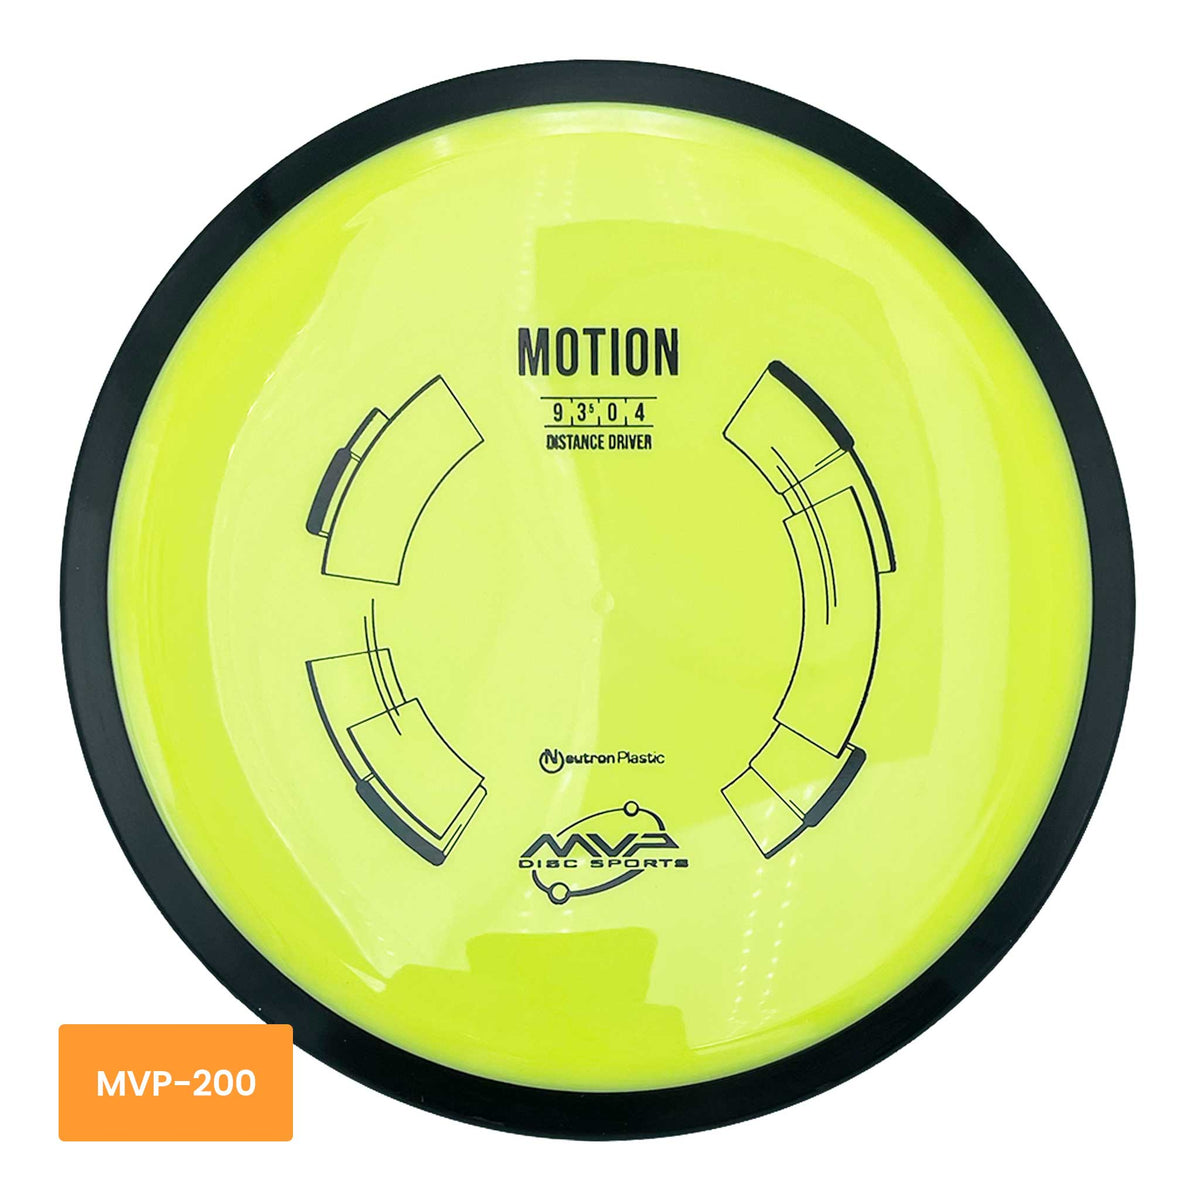 MVP Disc Sports Neutron Motion distance driver - Yellow